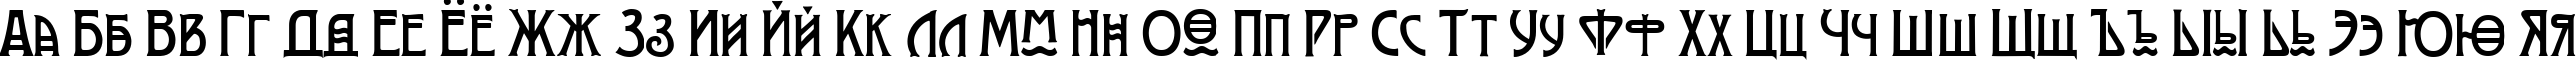 Пример написания русского алфавита шрифтом Modernist Three